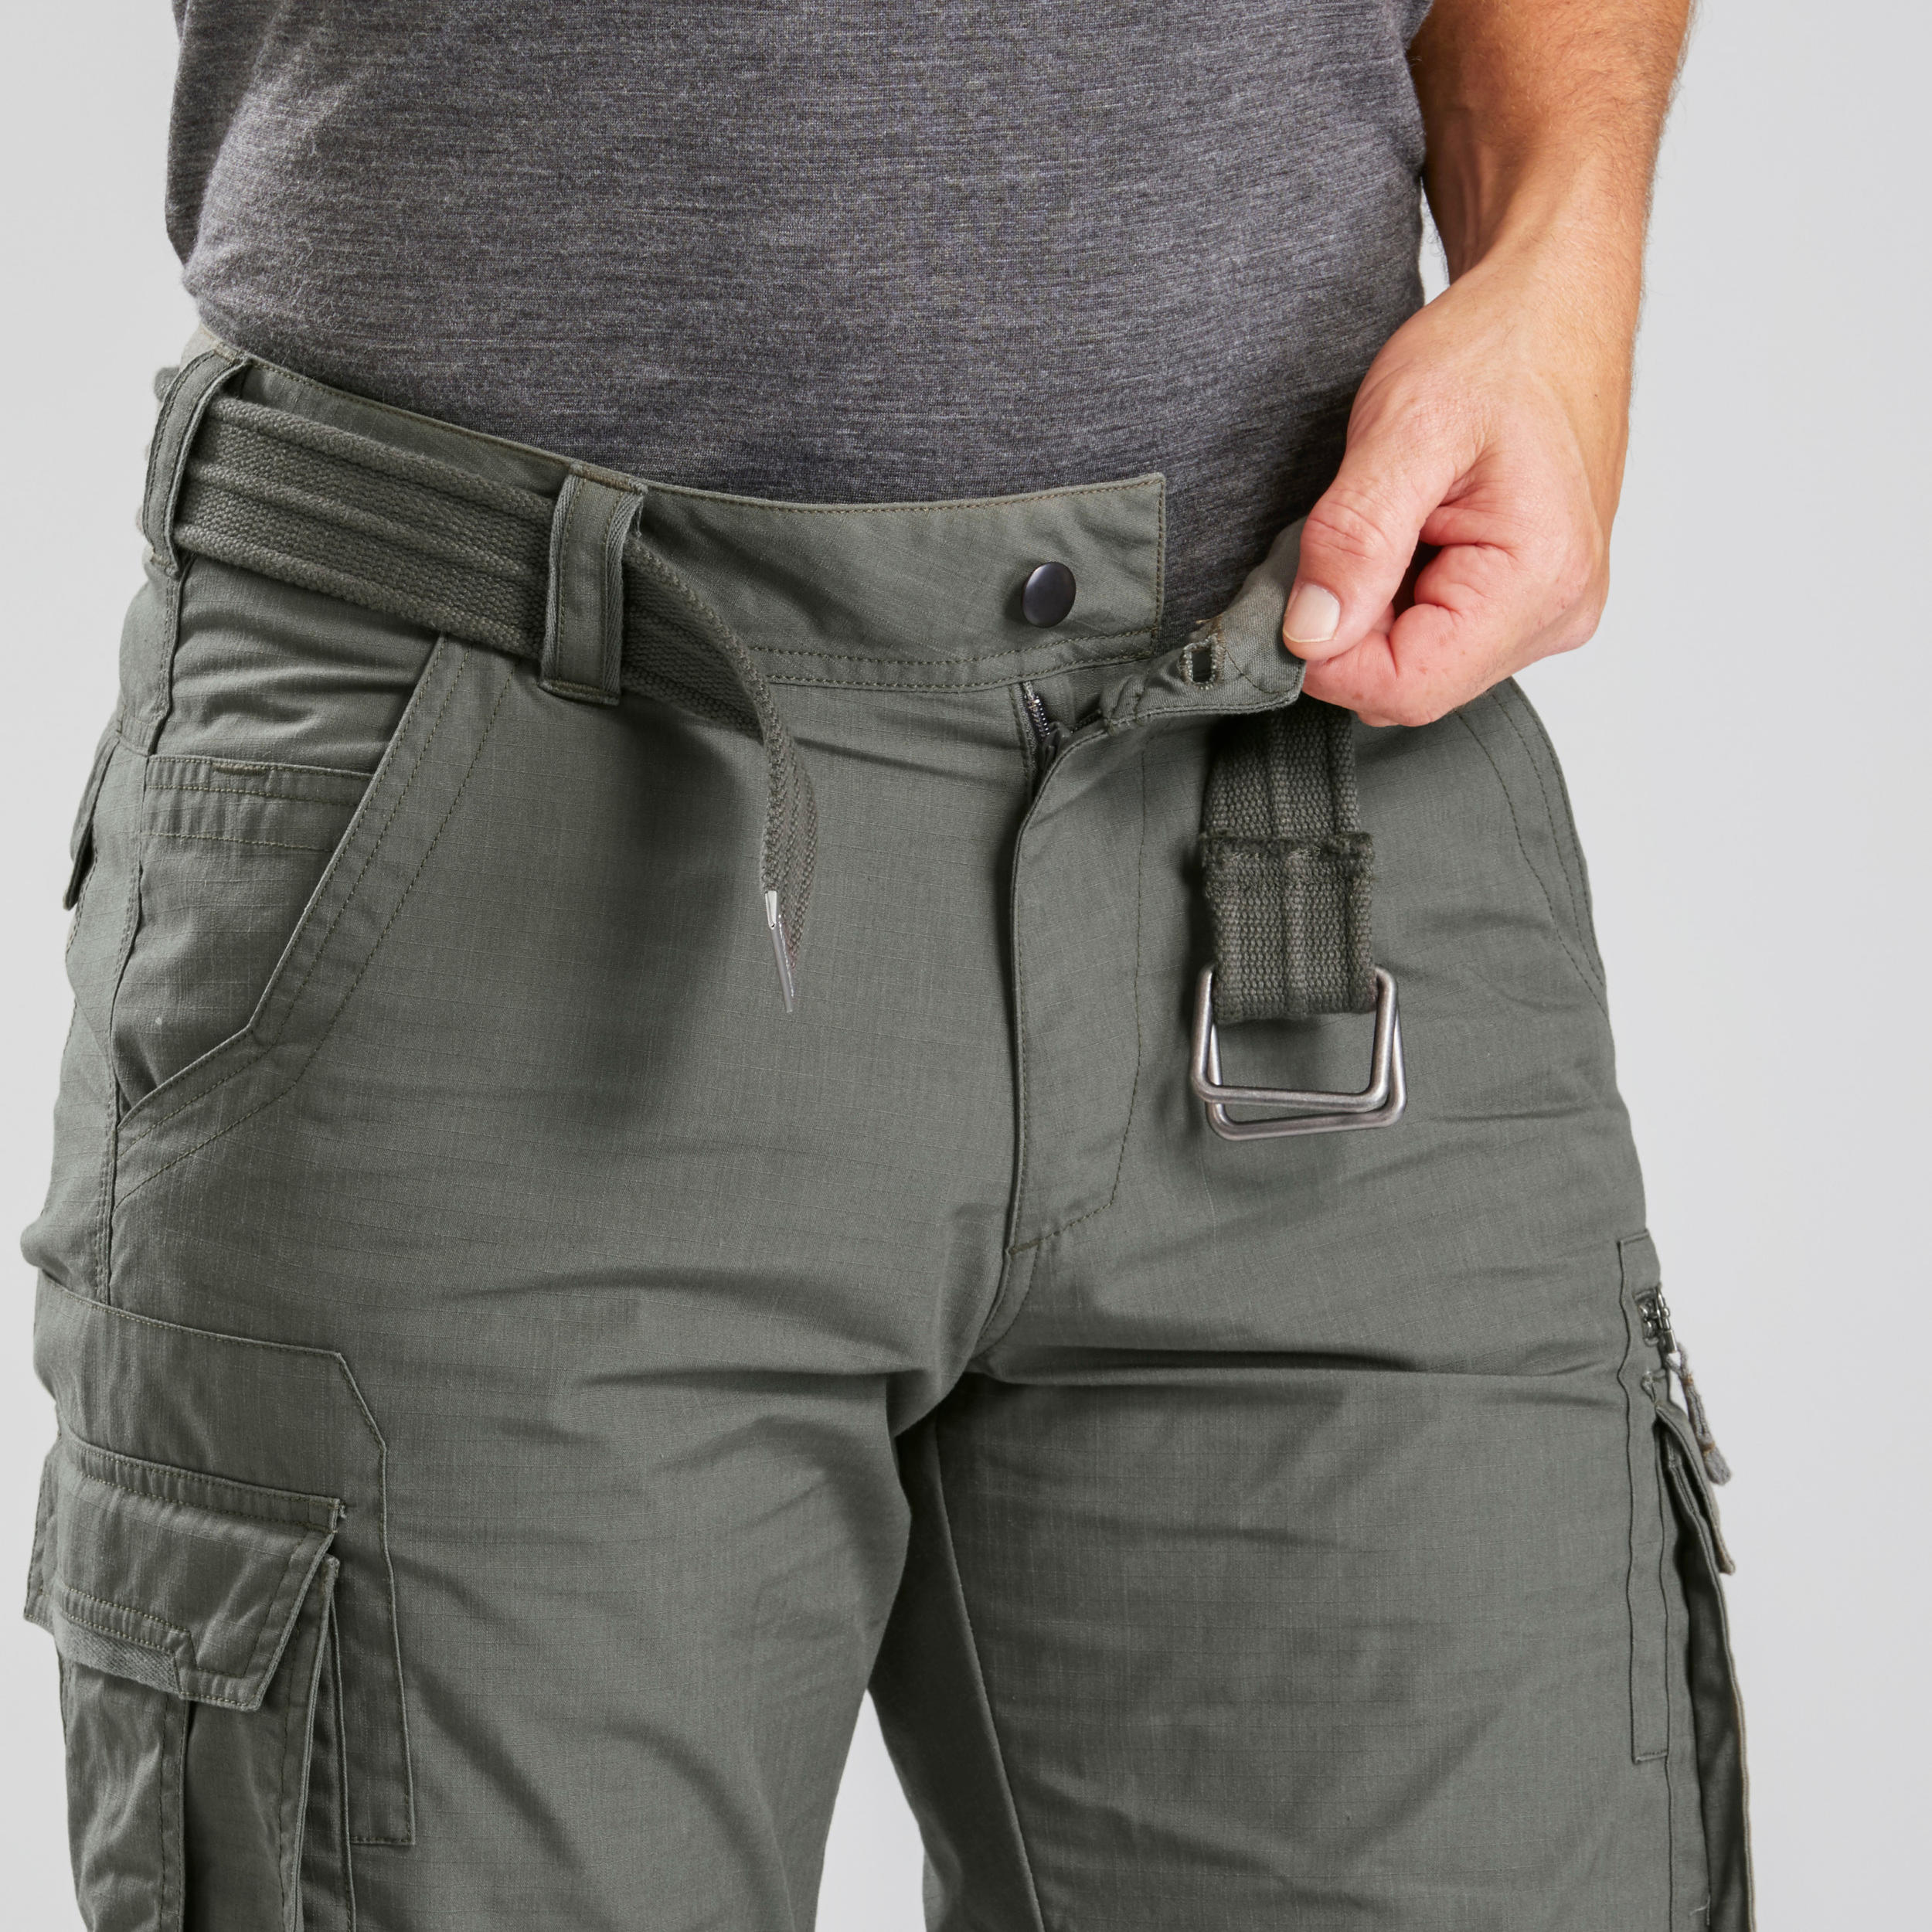 mens hiking cargo pants travel 100 khaki